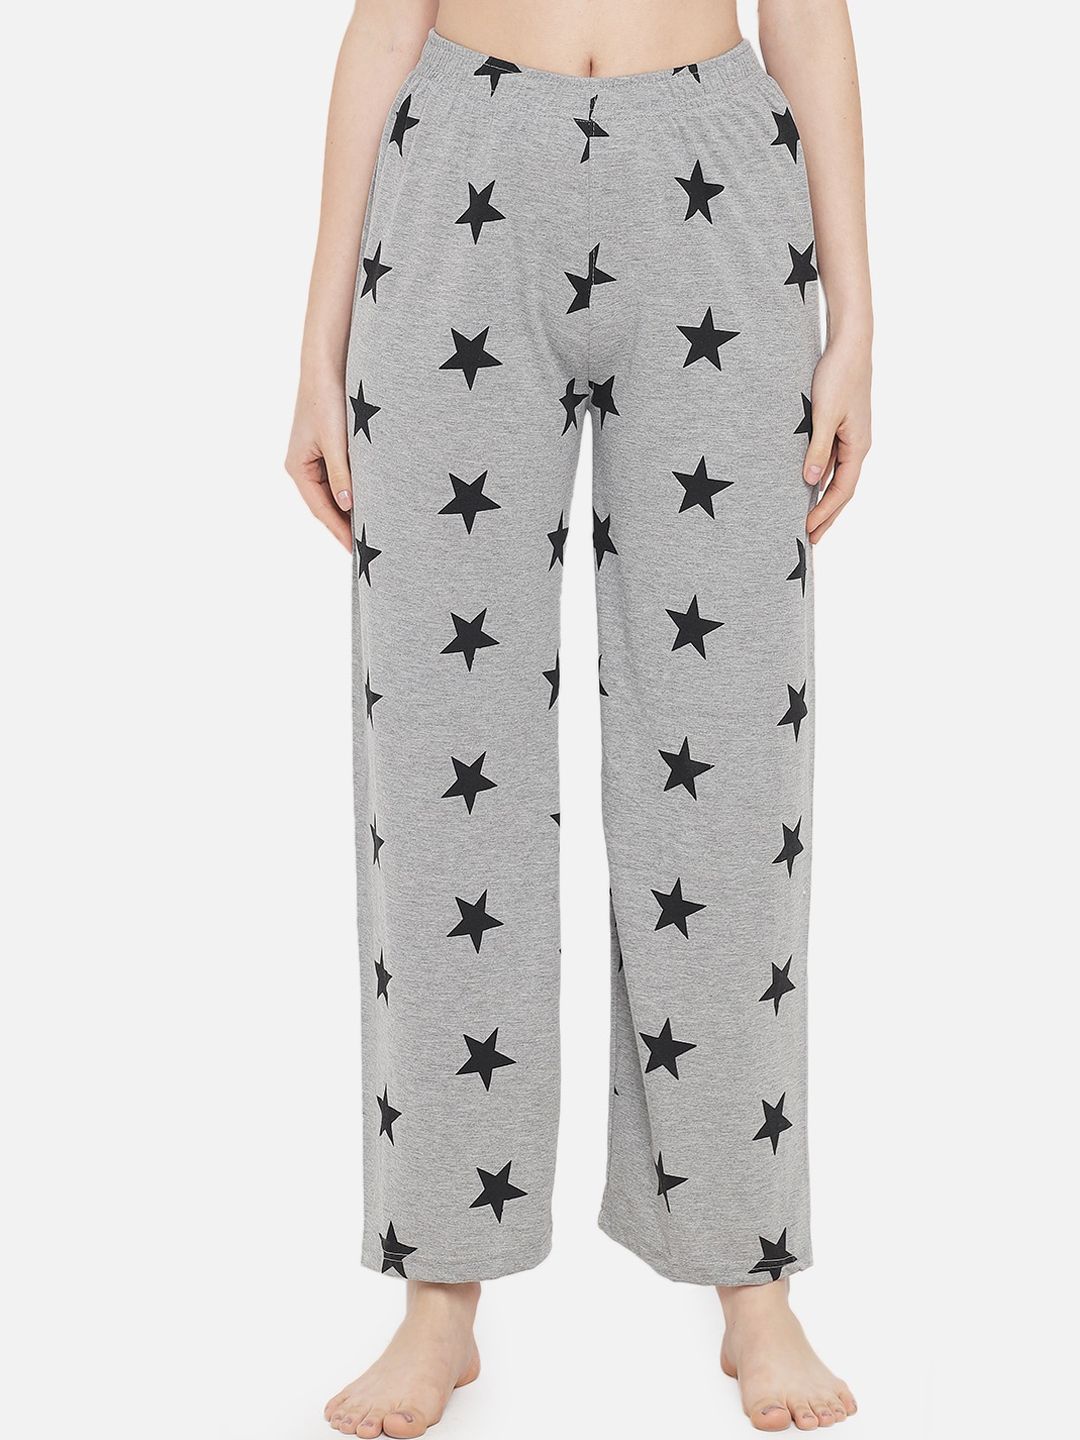 FFLIRTYGO Women Grey & Black Star Printed Pyjamas Price in India